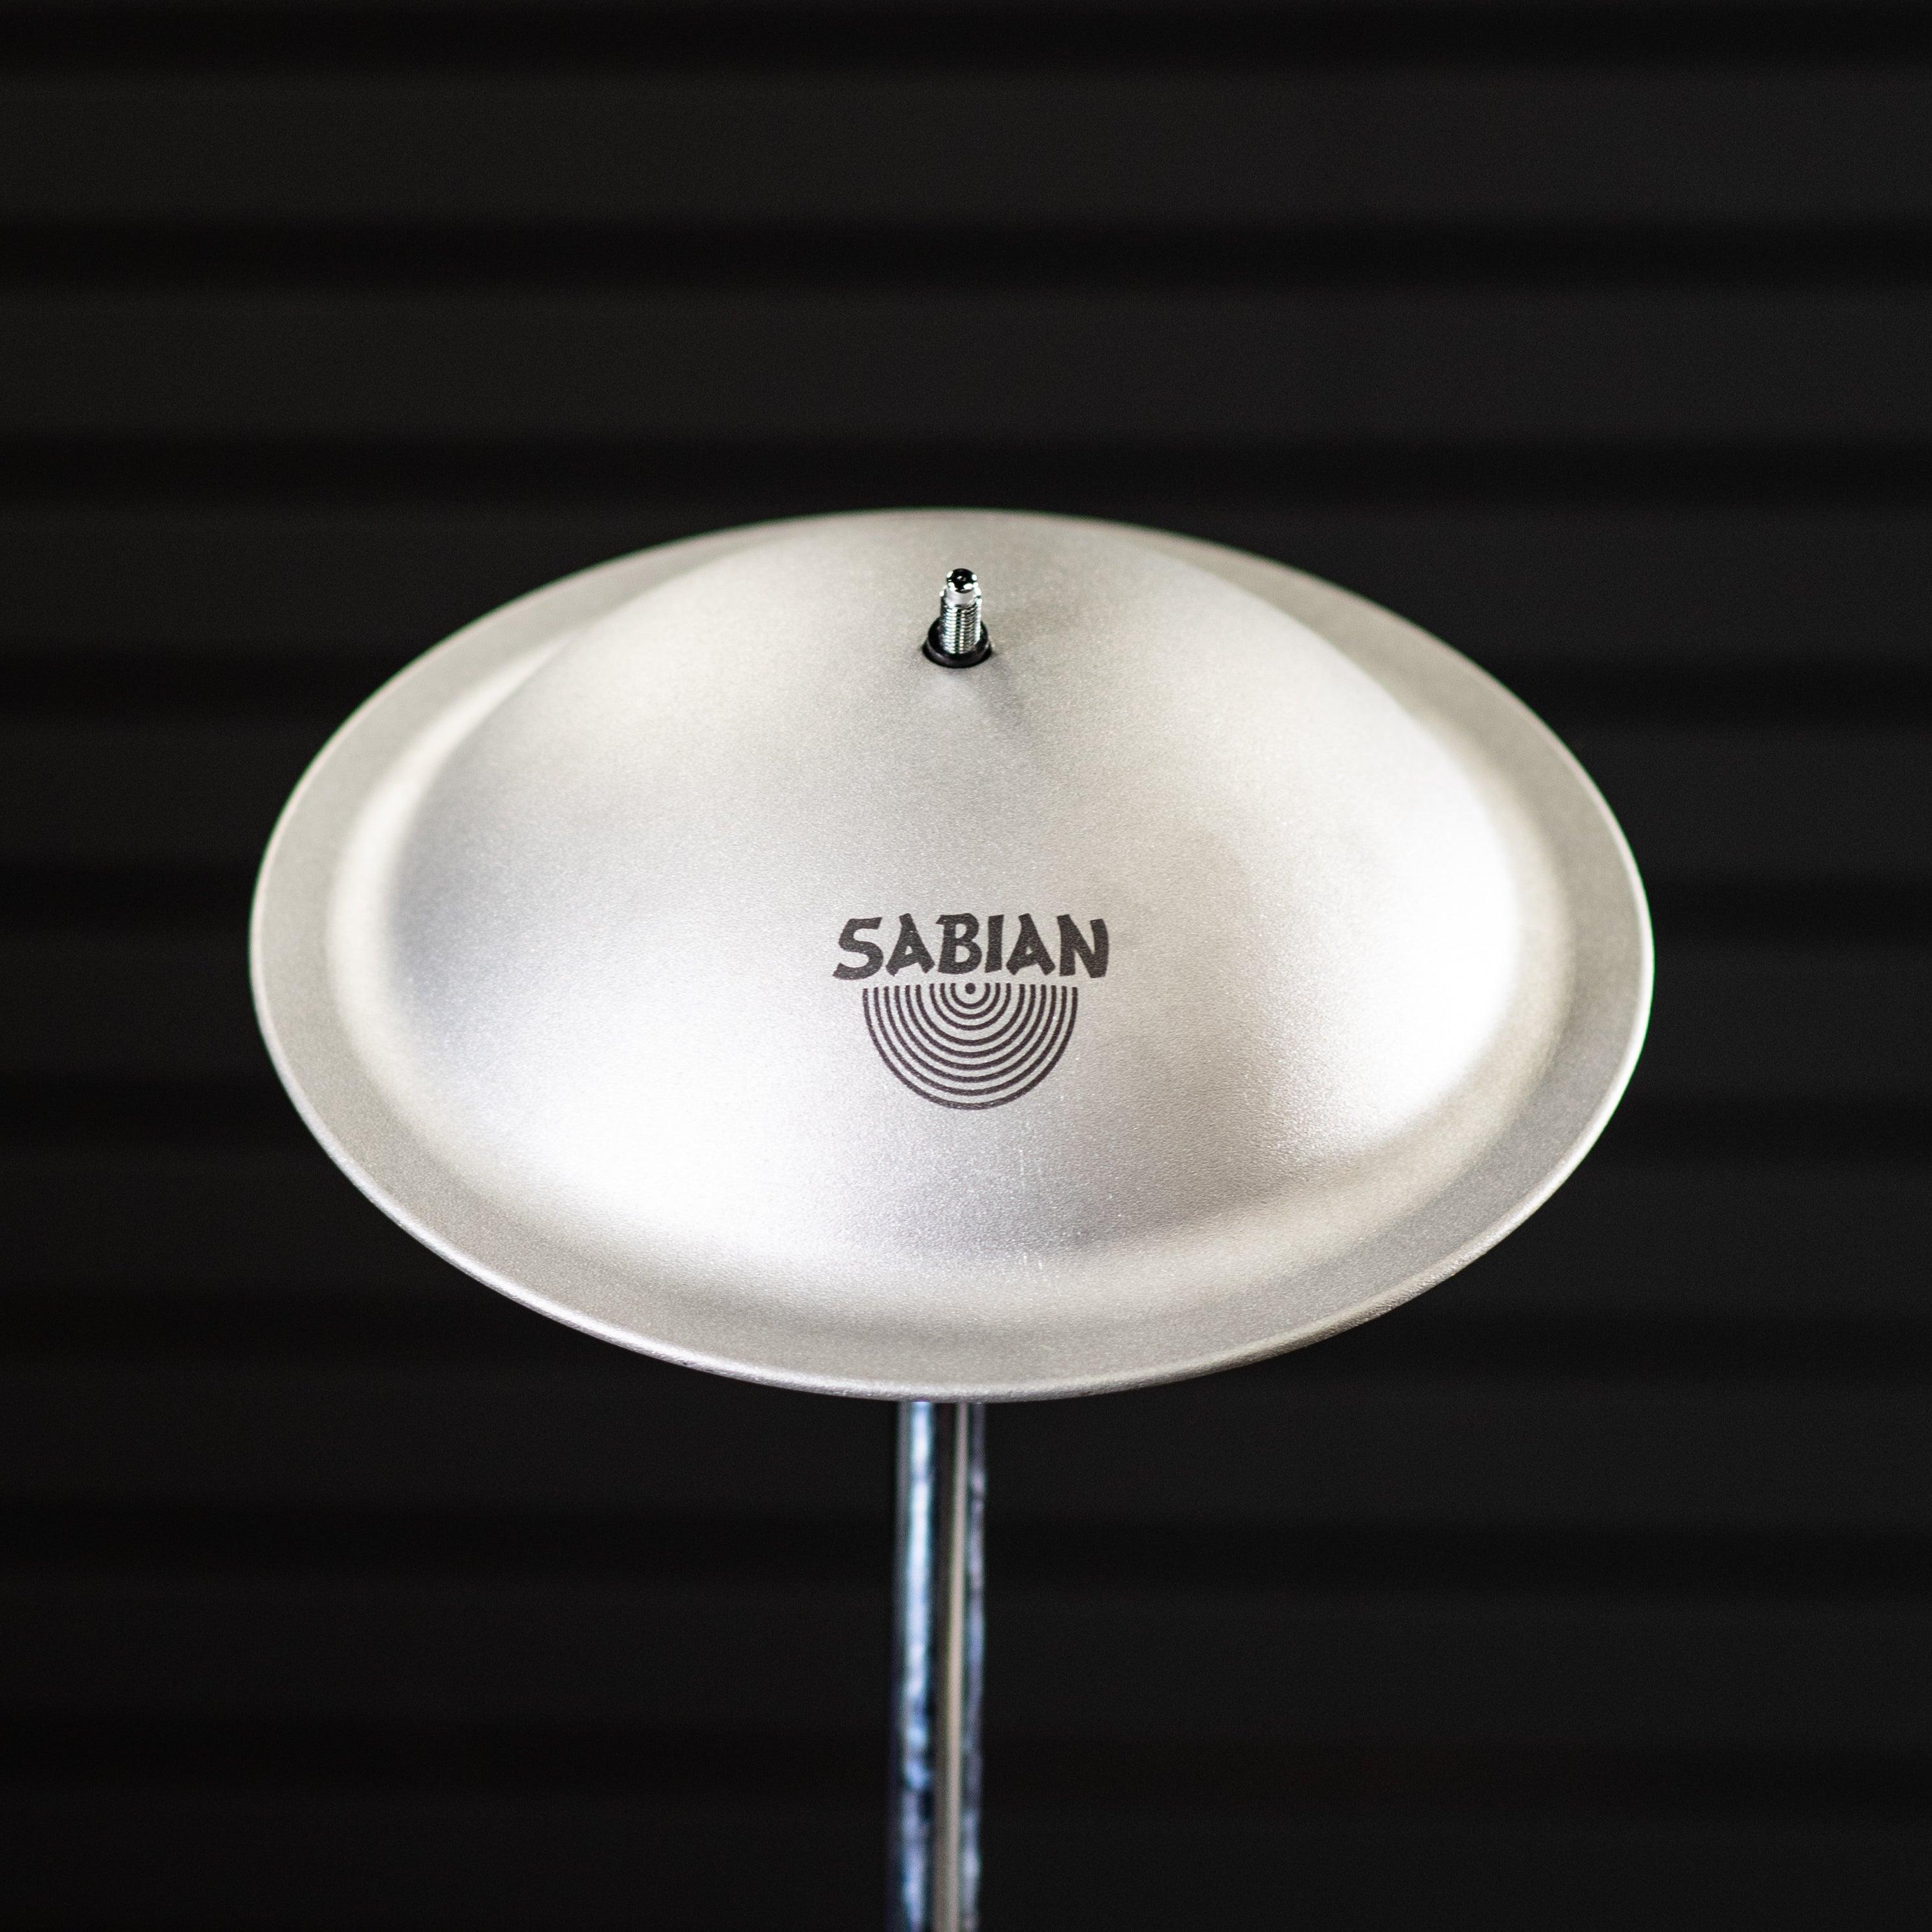 Sabian 11" Alu Bell Cymbal - Impulse Music Co.